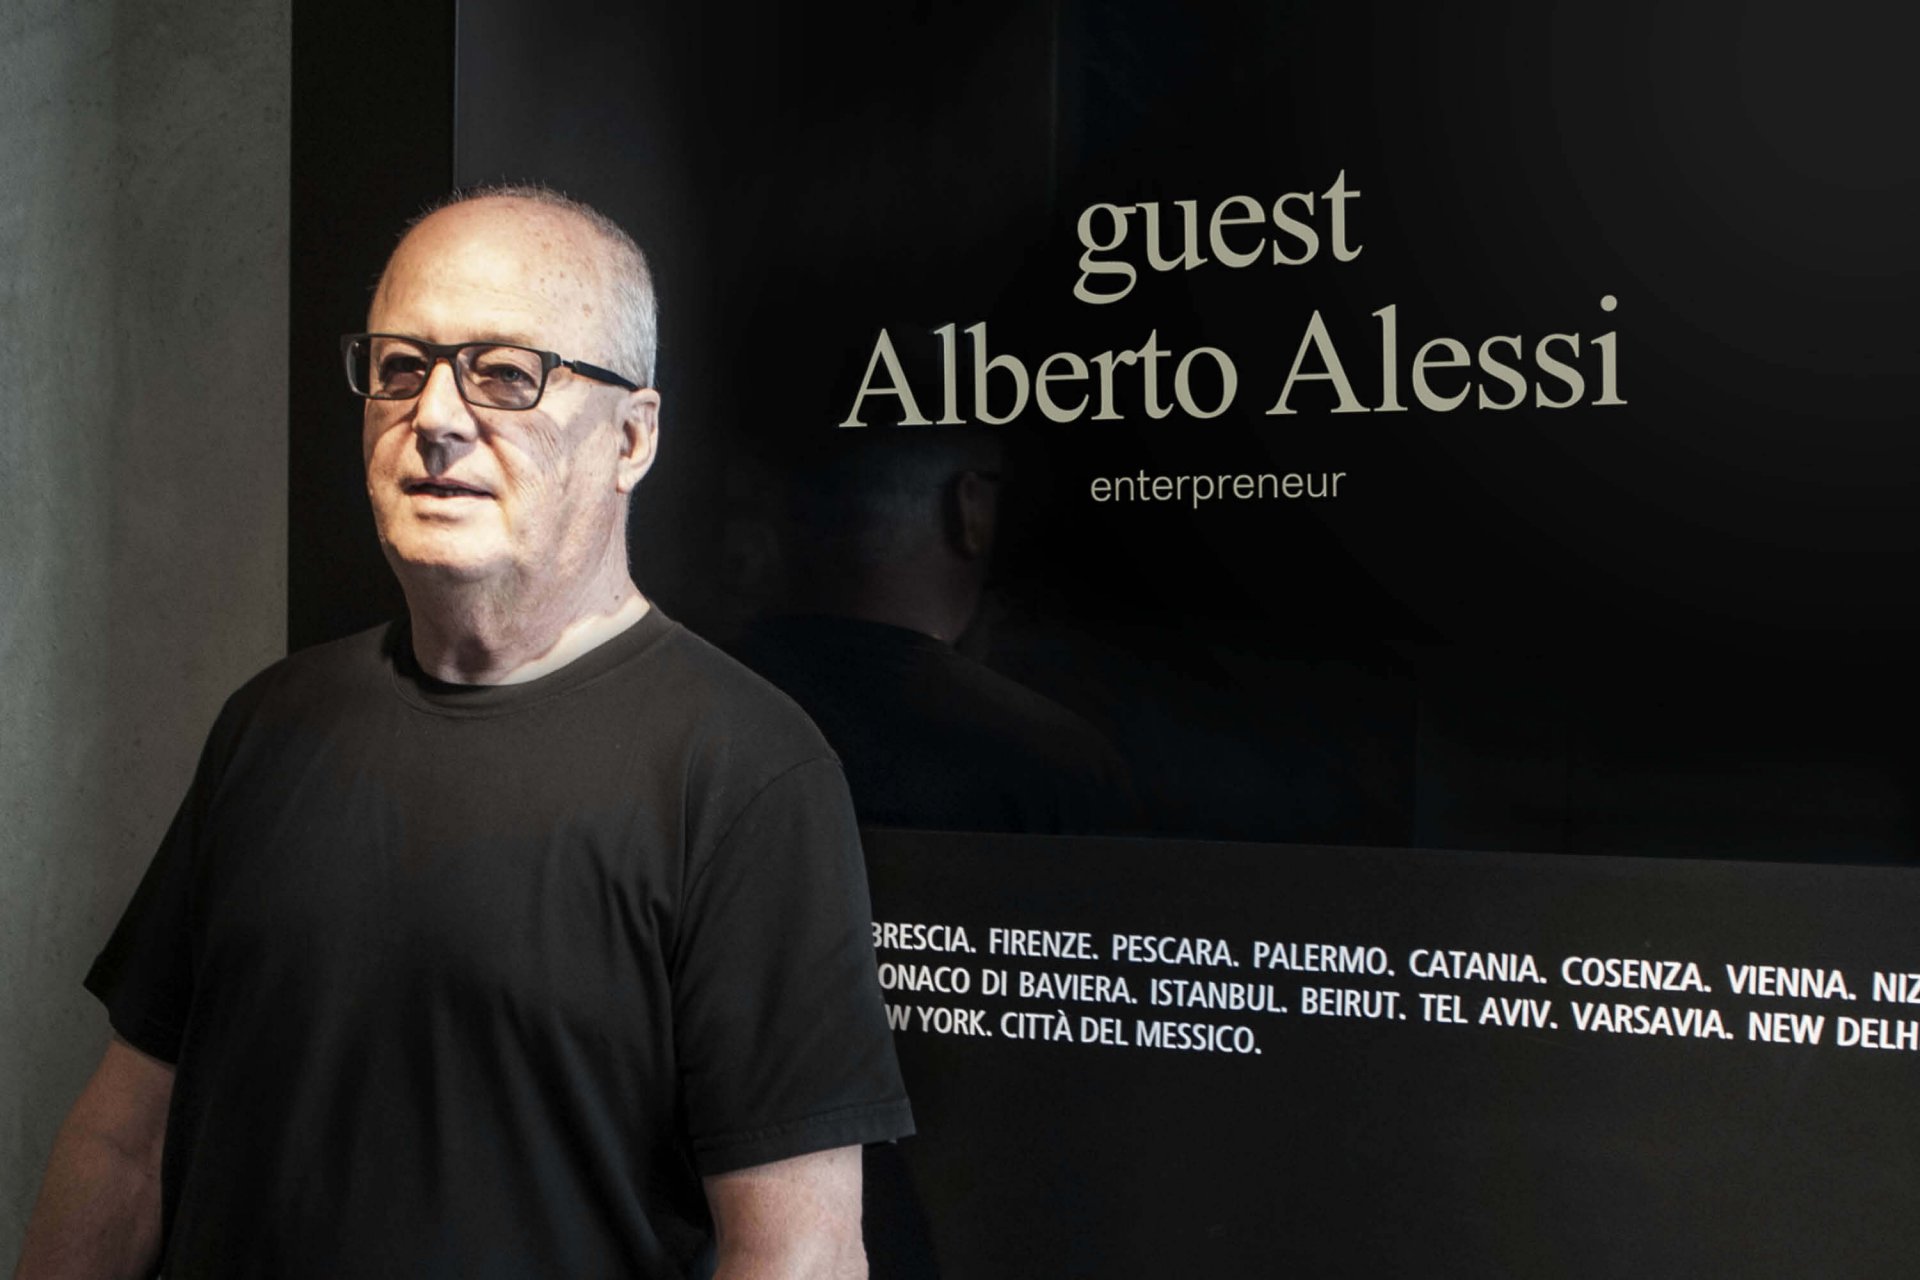 Alberto Alessi, entrepreneur